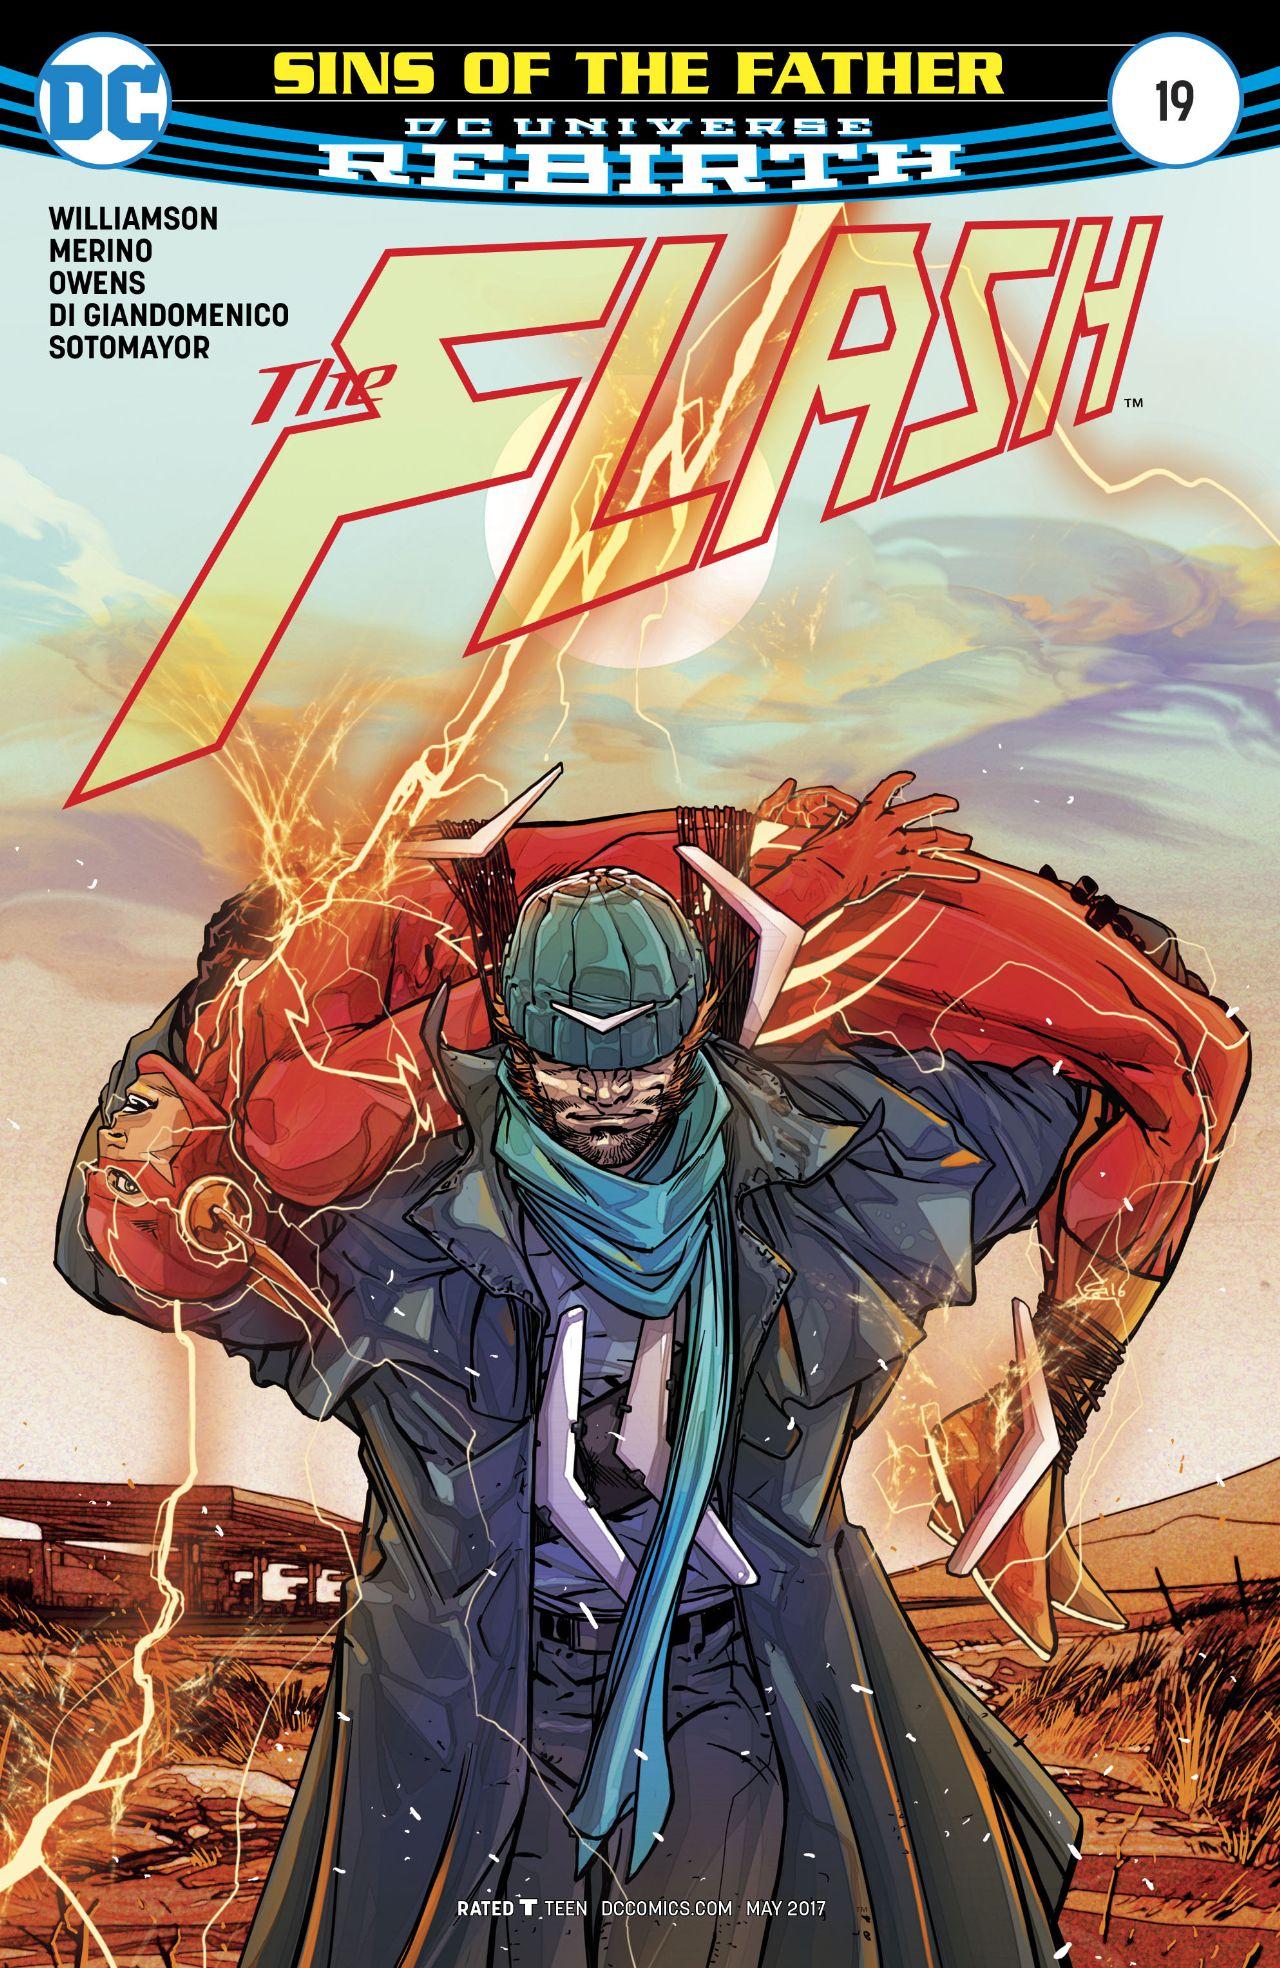 The Flash Vol. 5 #19